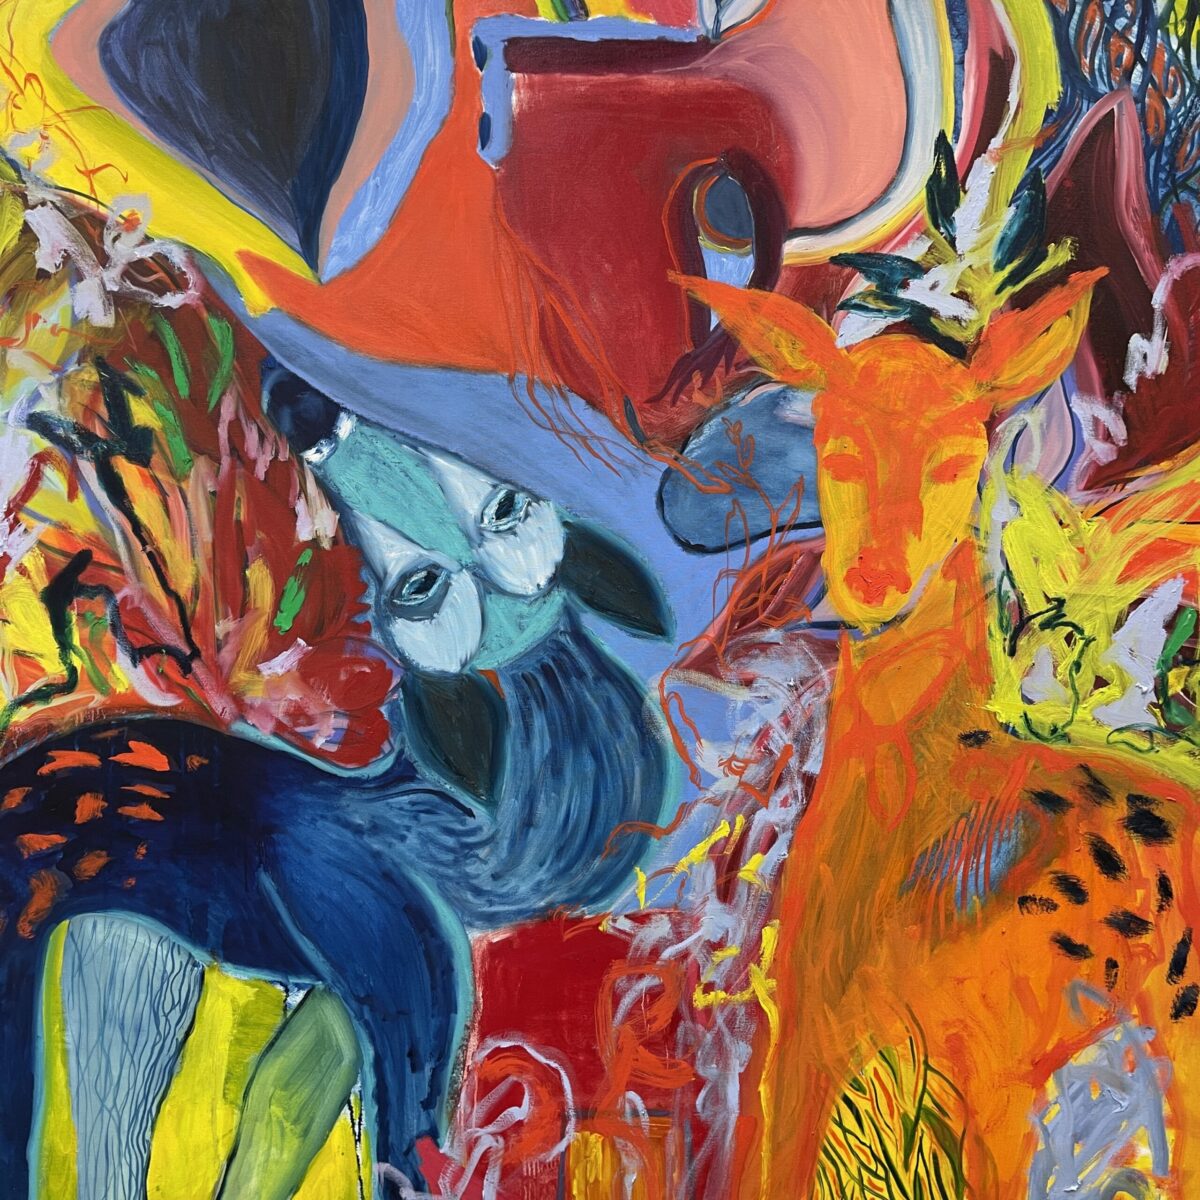 Alicia Sampson Ethridge, Bridging Two Worlds, Oil on canvas, 60 x 57 inches, 2022